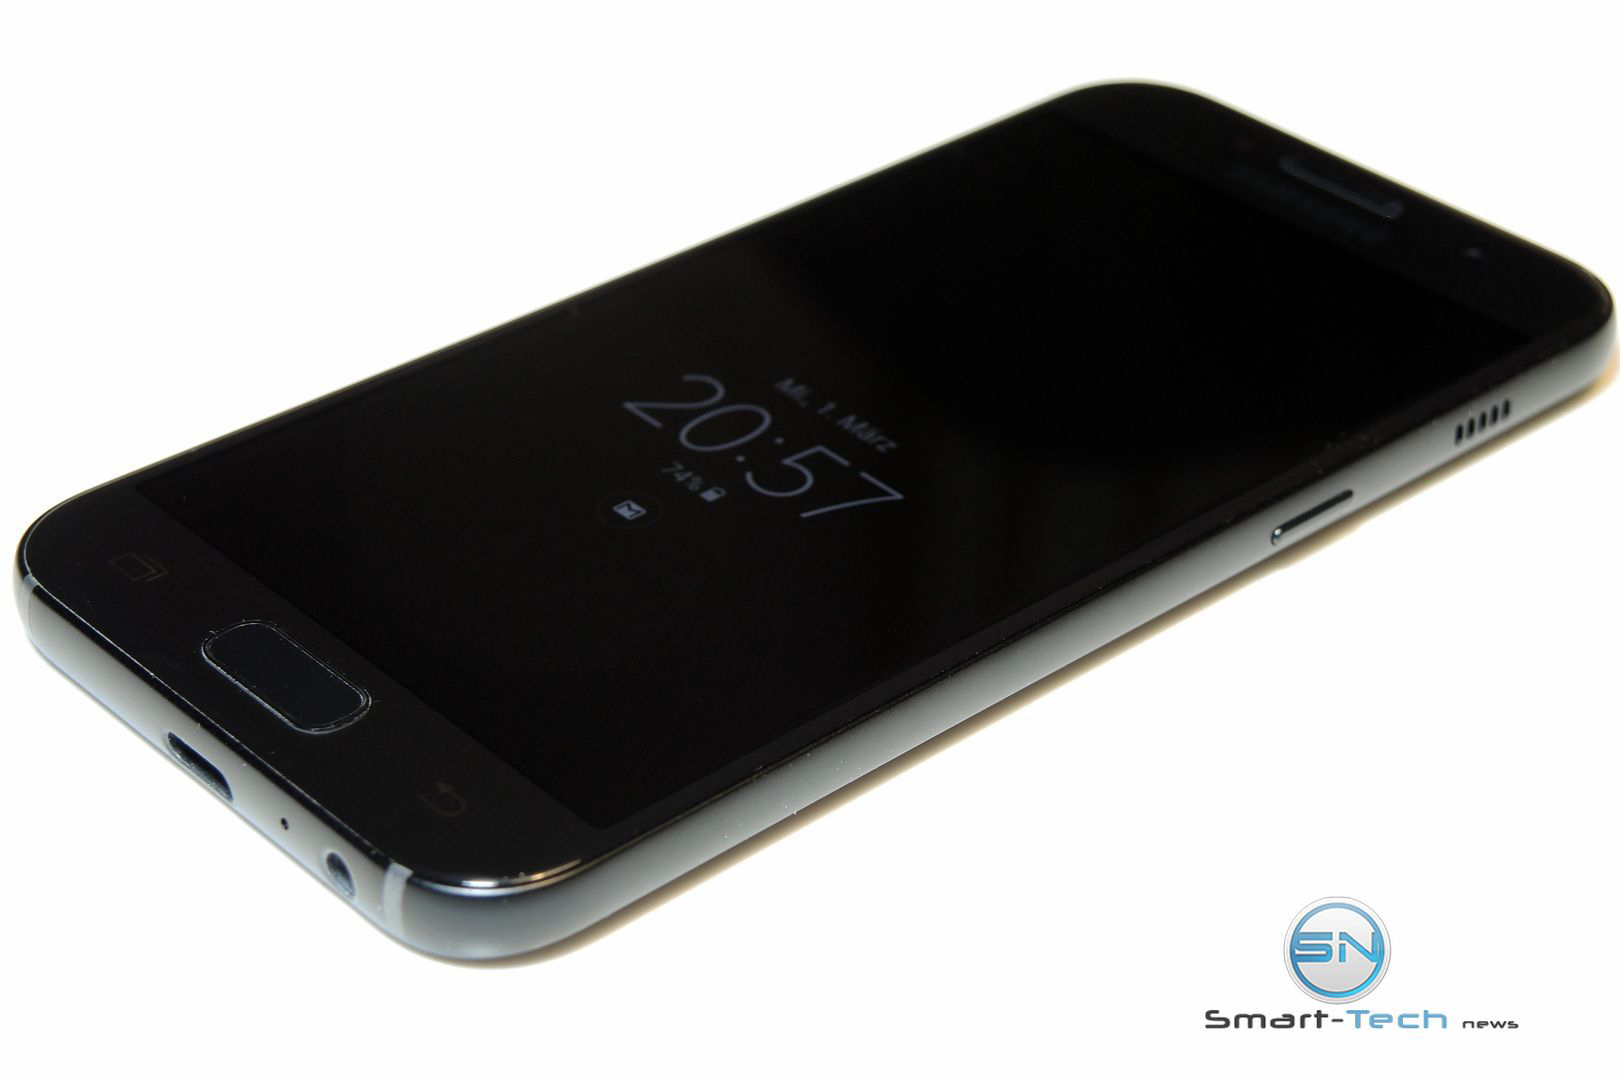 Samsung Galaxy A3 (2017) das Compacte im S7 Design